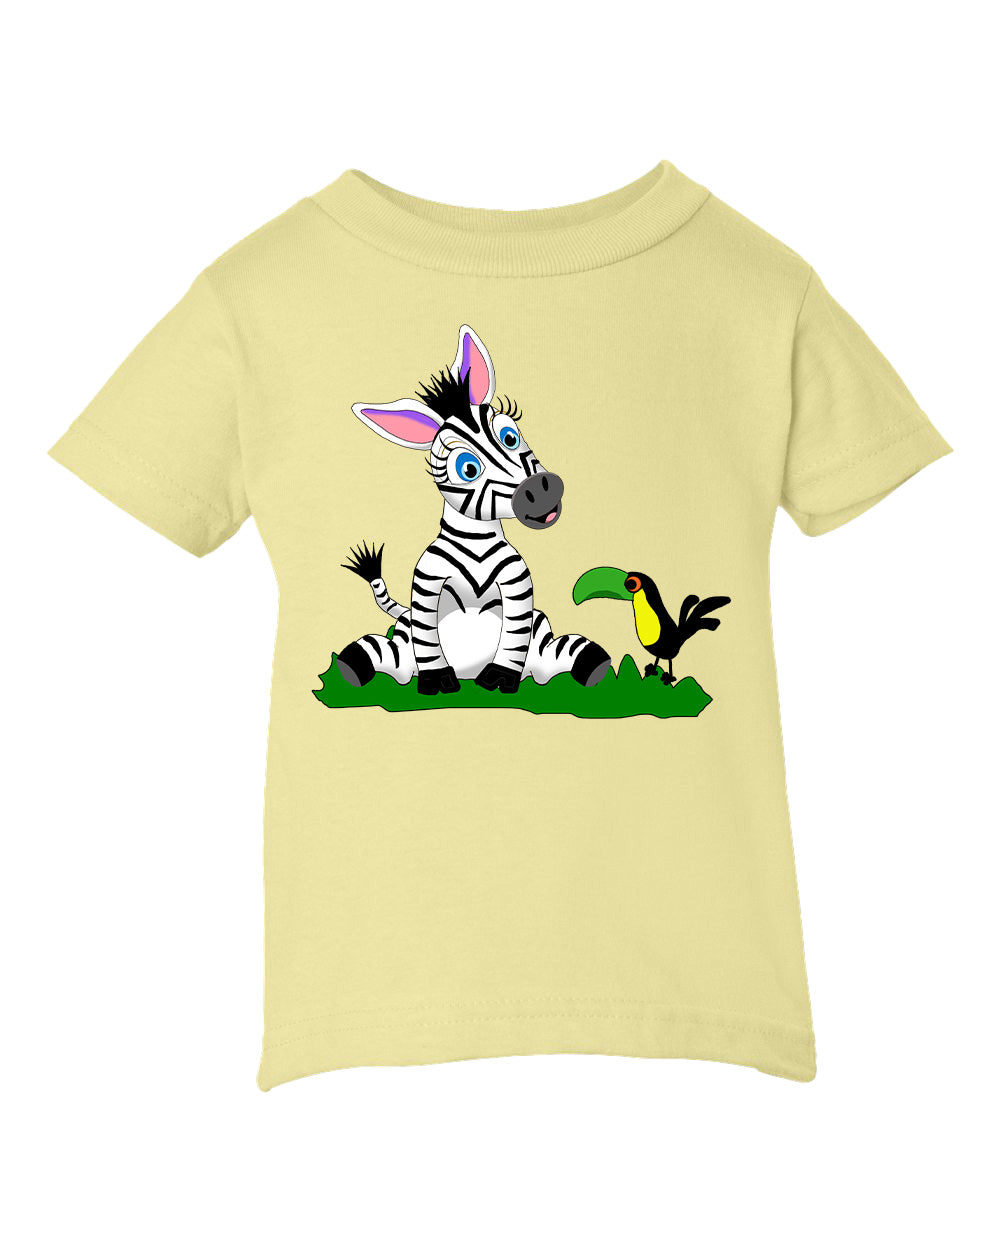 Zebra Toddler T-shirt